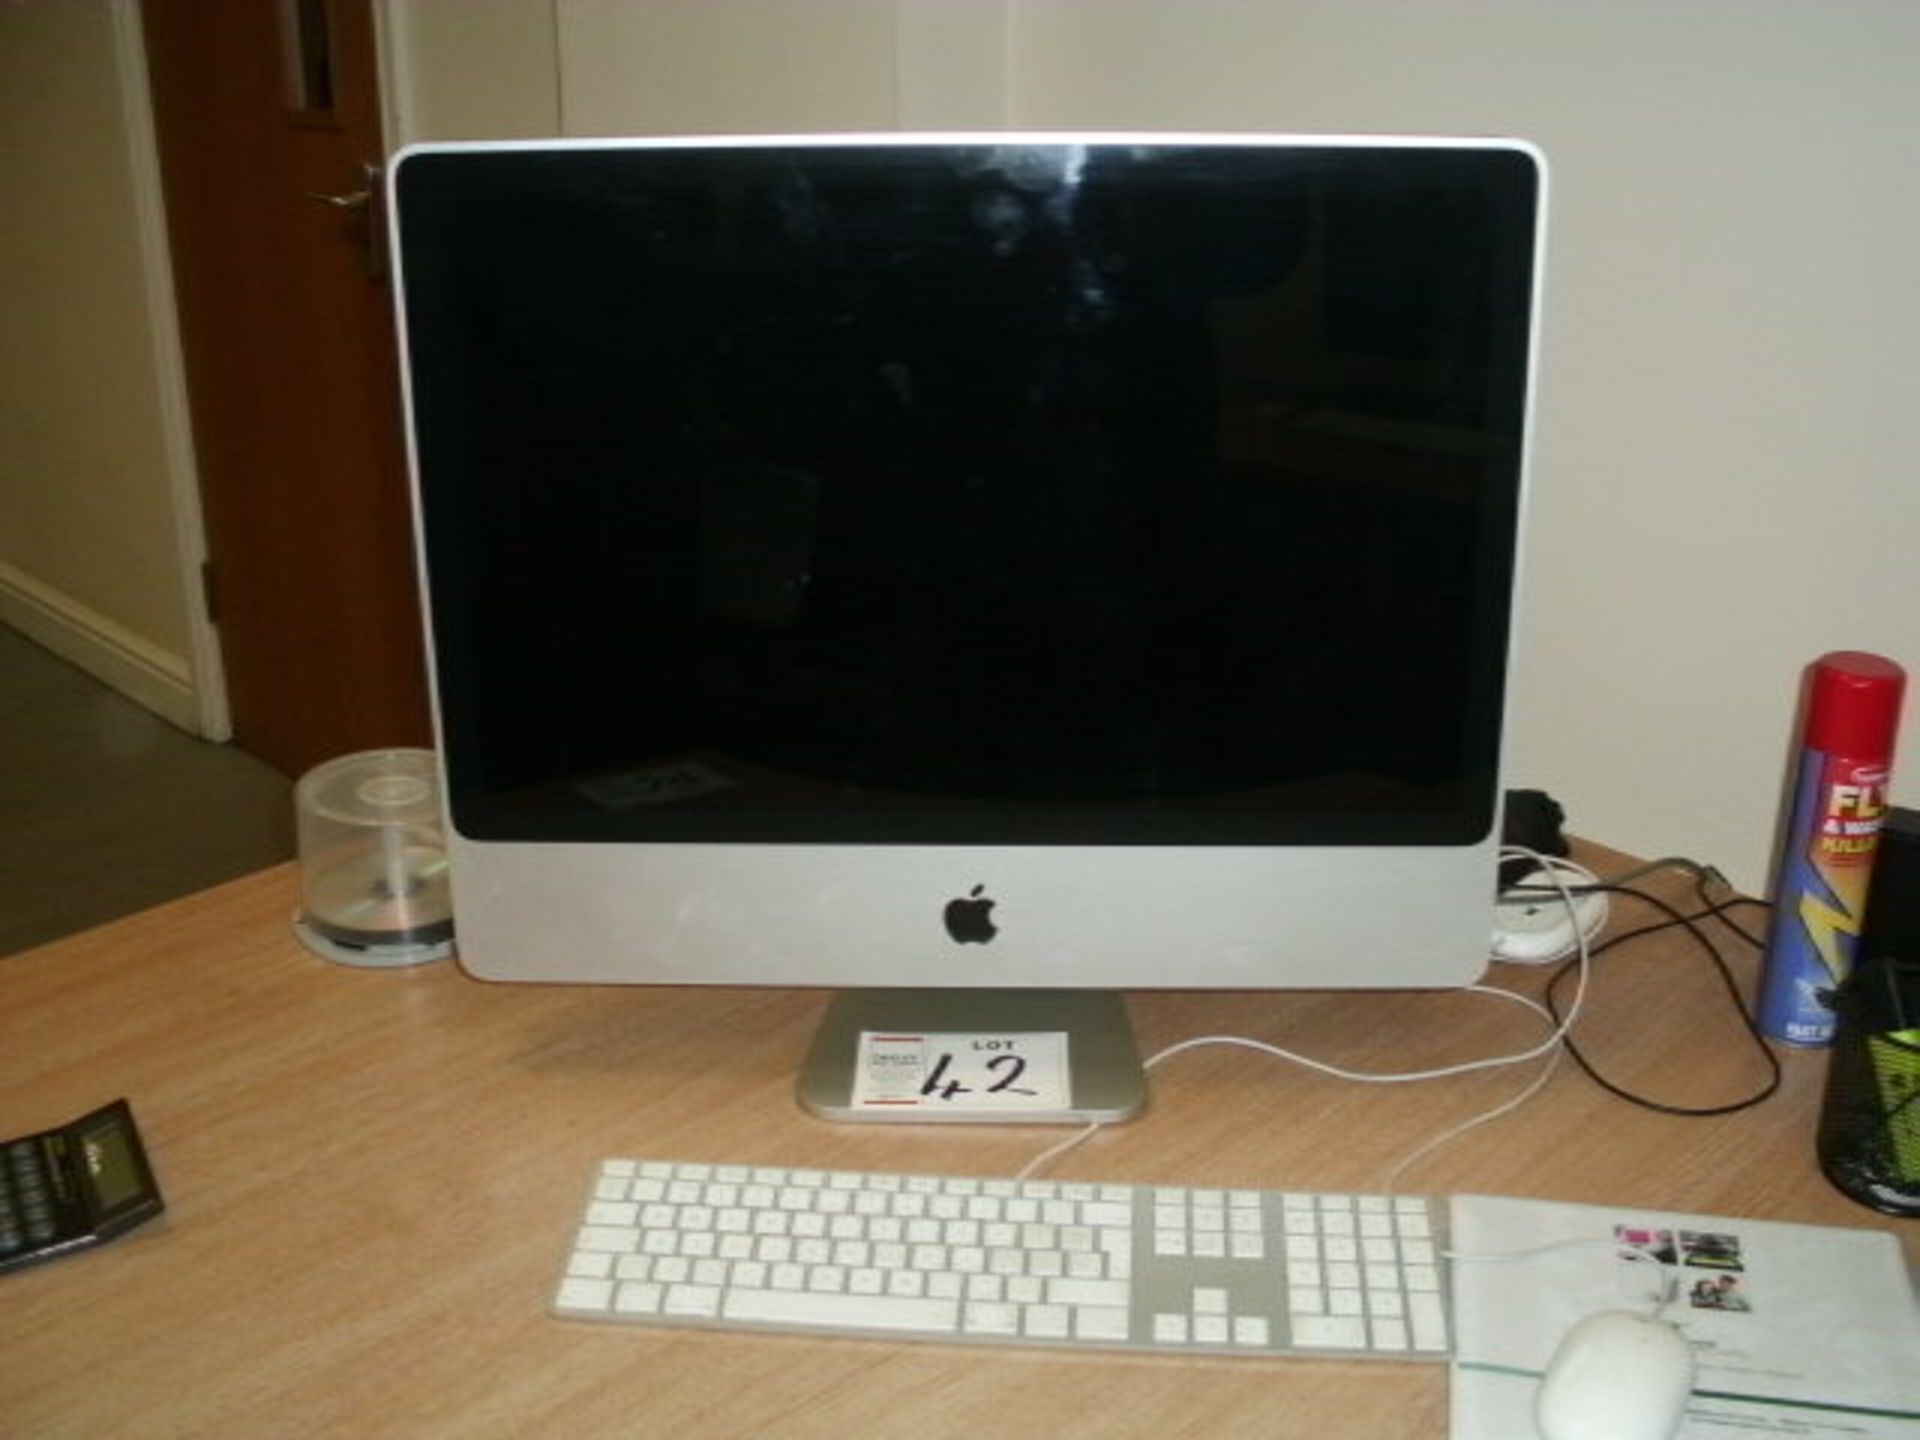 Apple Imac PERSONAL COMPUTER with 24" screen model no A125, EMC no 2211, serial no W89373BNZE4